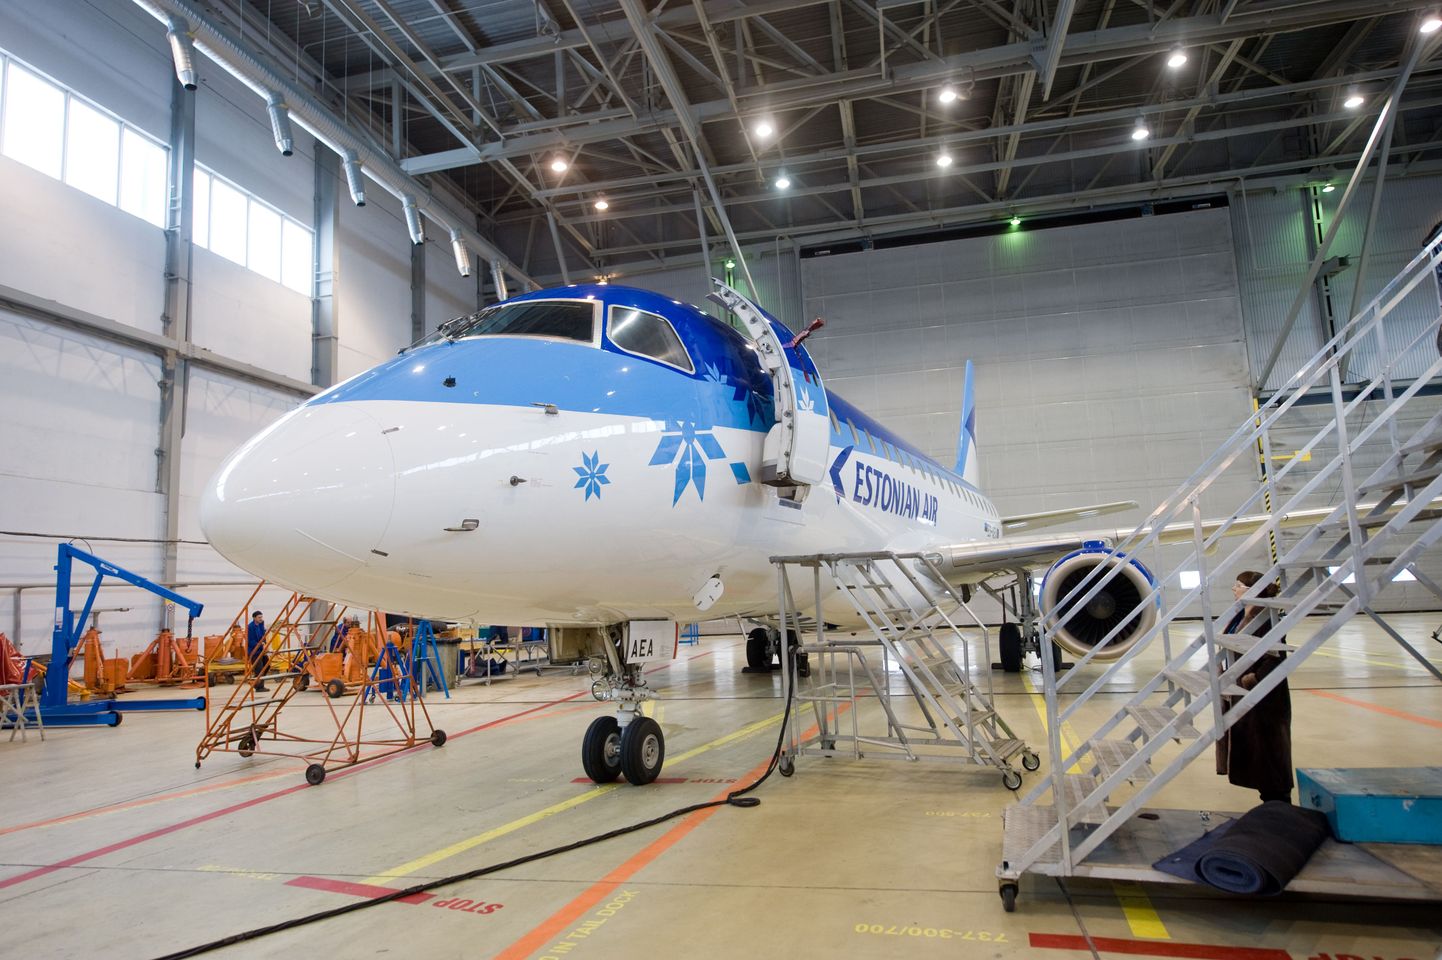 Estonian Airi uus lennuk Embraer 170.